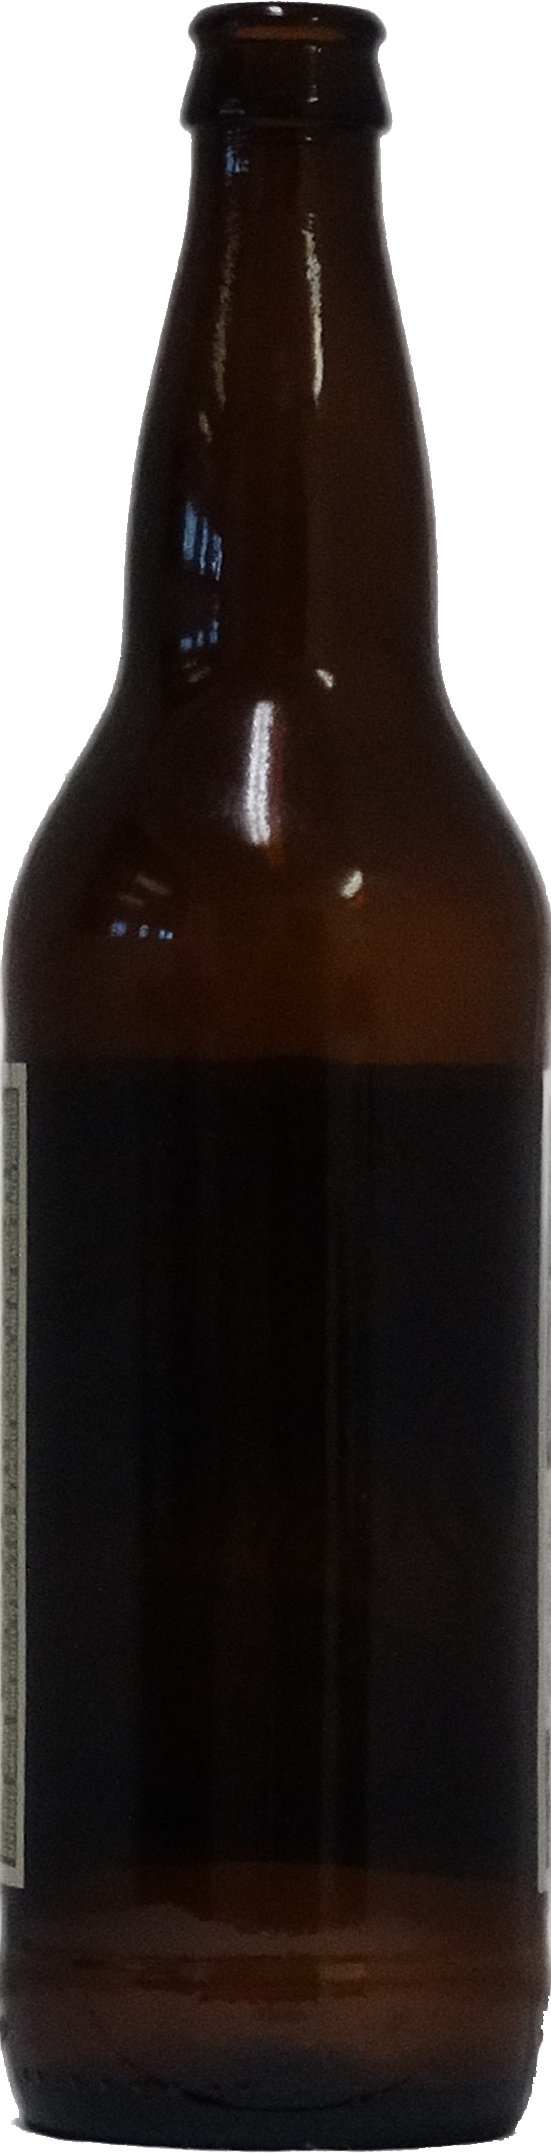 rust Gouverneur Beperkingen Create a Beer Bottle in Fusion 360 - Product Design Online